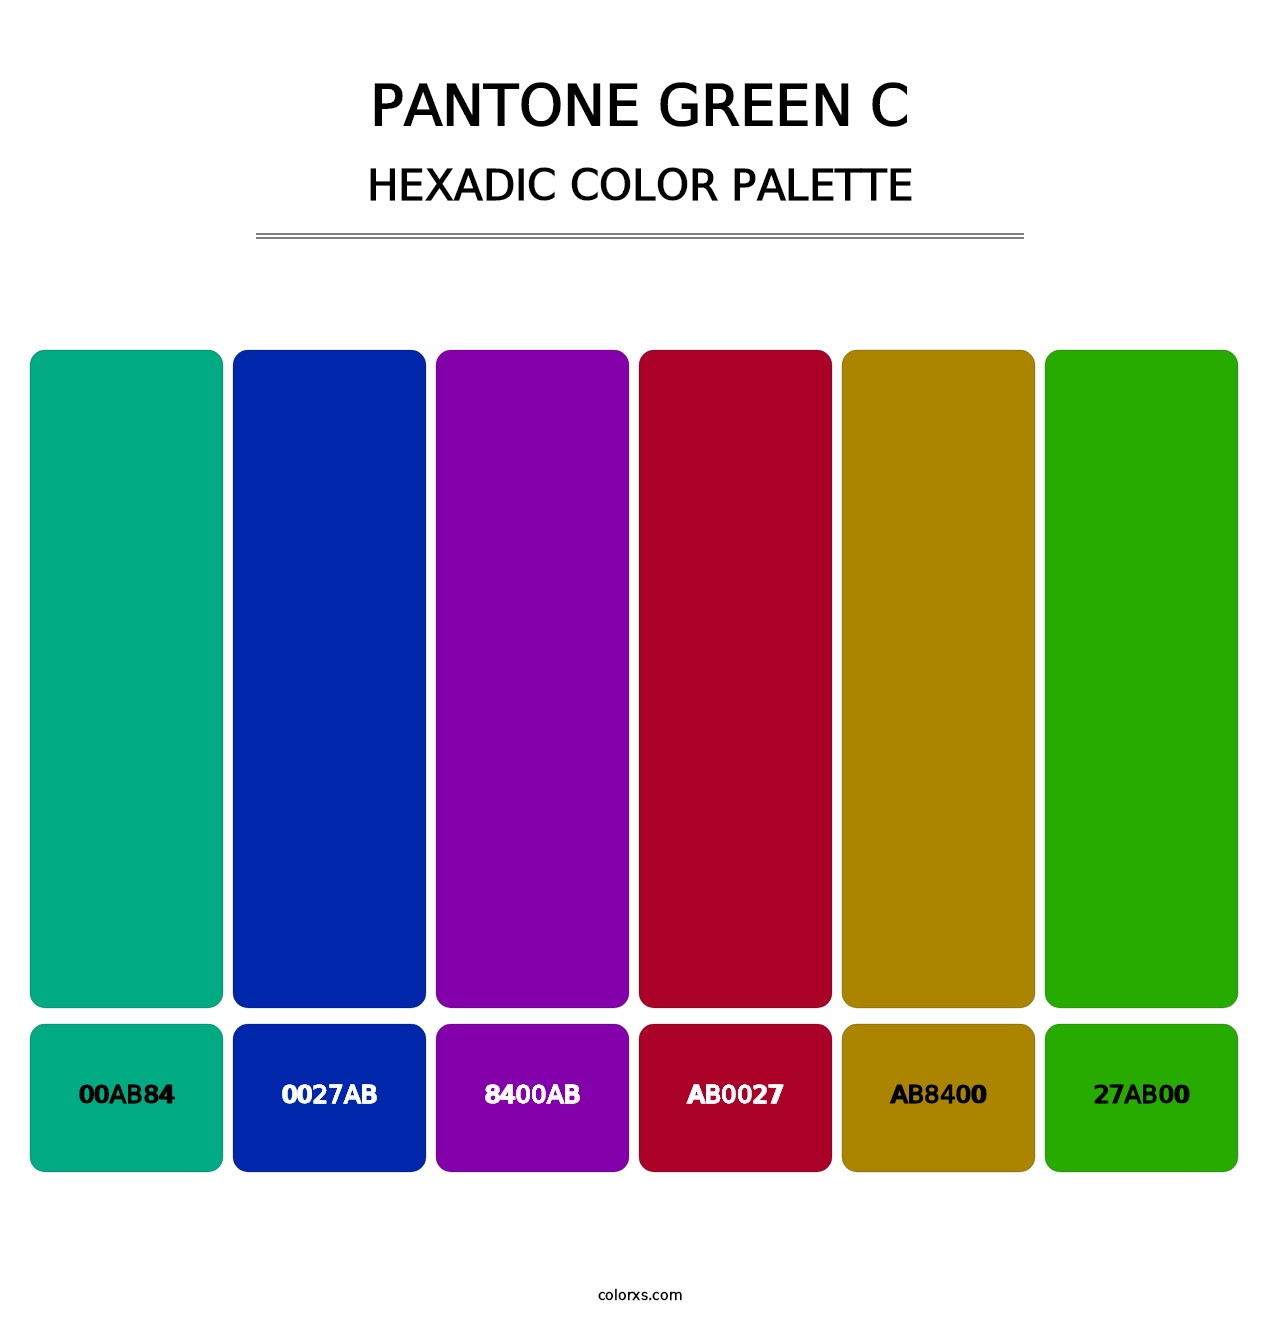 PANTONE Green C - Hexadic Color Palette